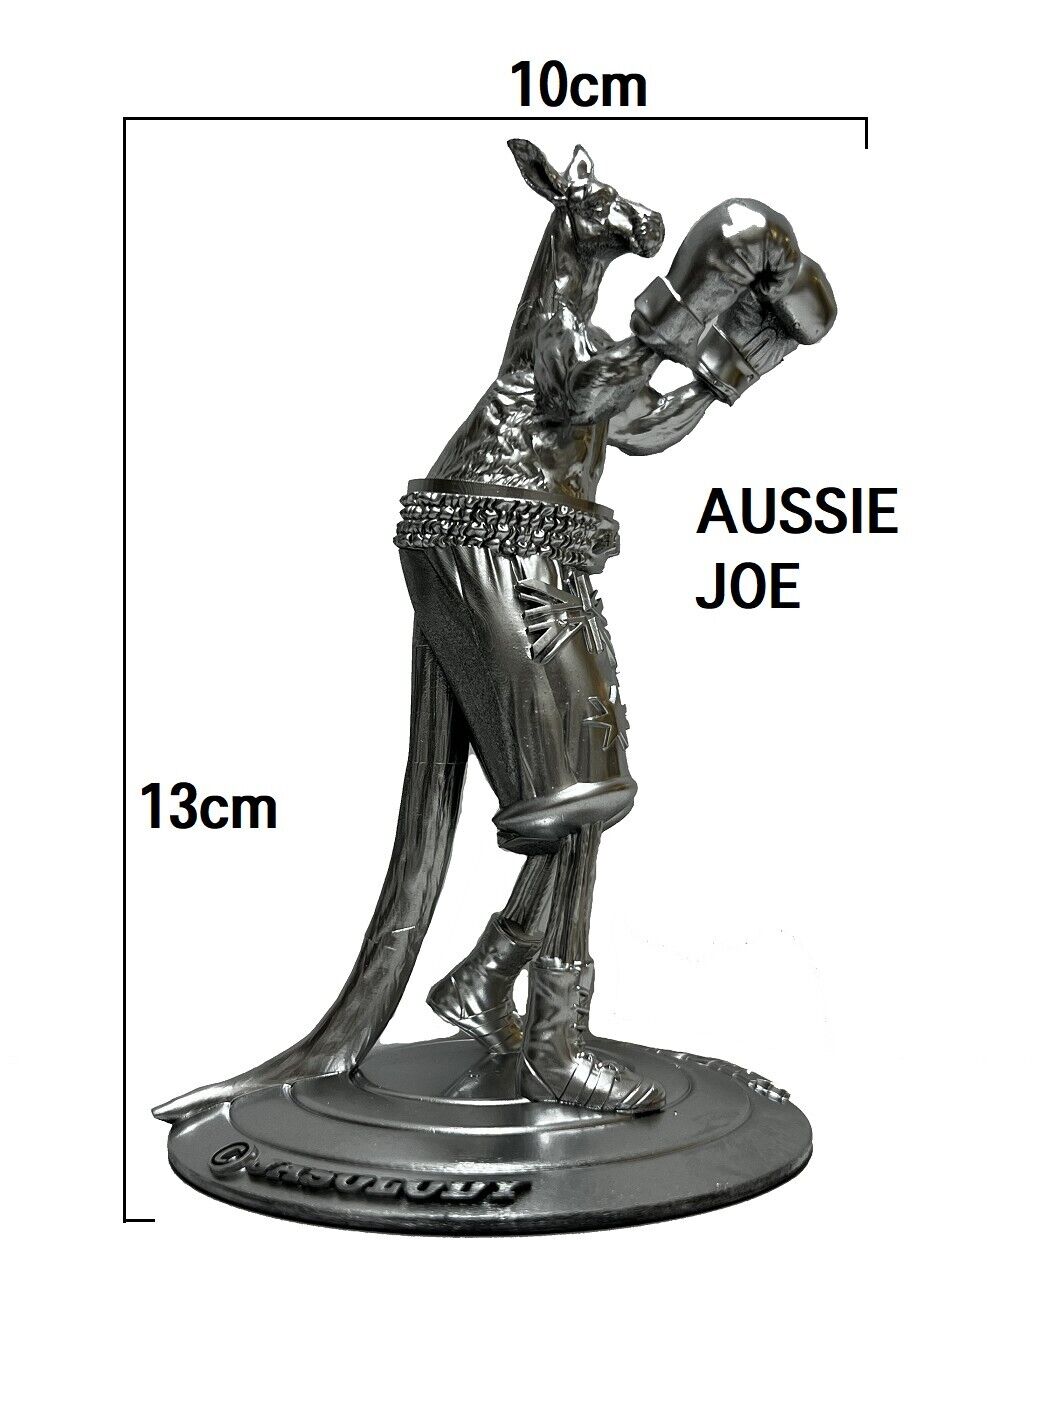 Boxing Kangaroo Australia Day Aussie Flag Statue Figurine Australiana 14cm High